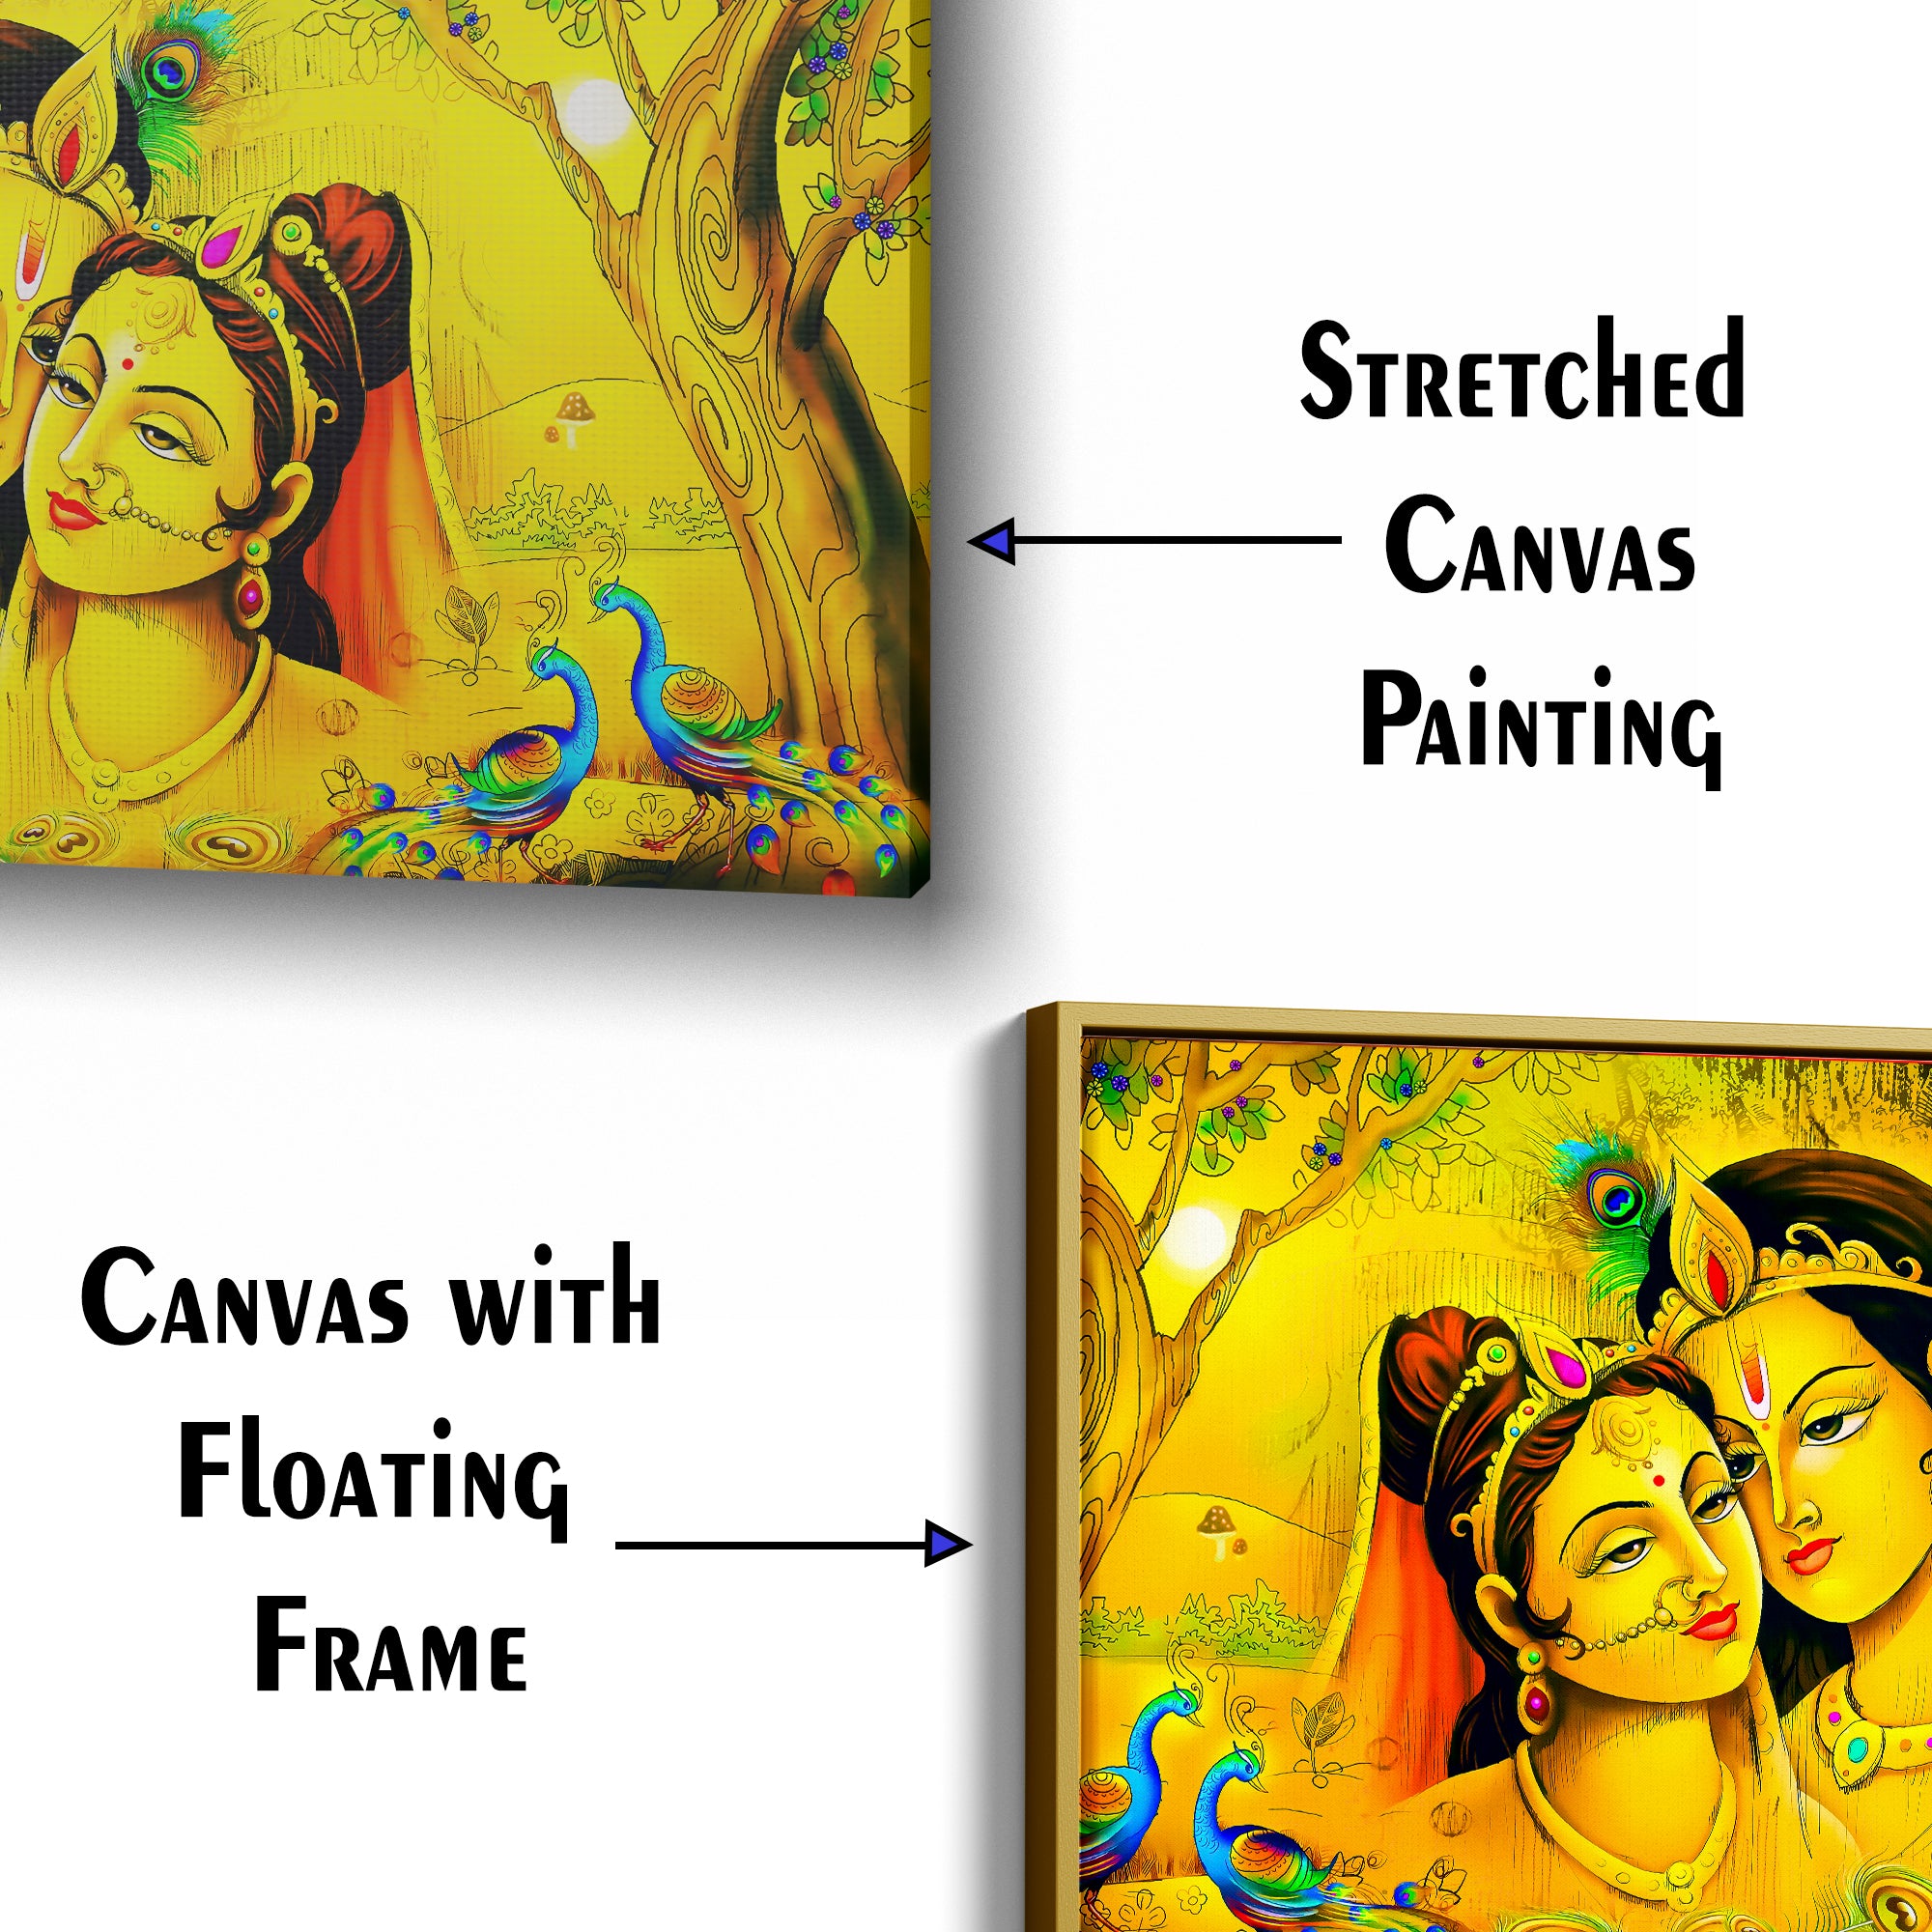 Radha Krishna Morden Art Canvas Wall Painting